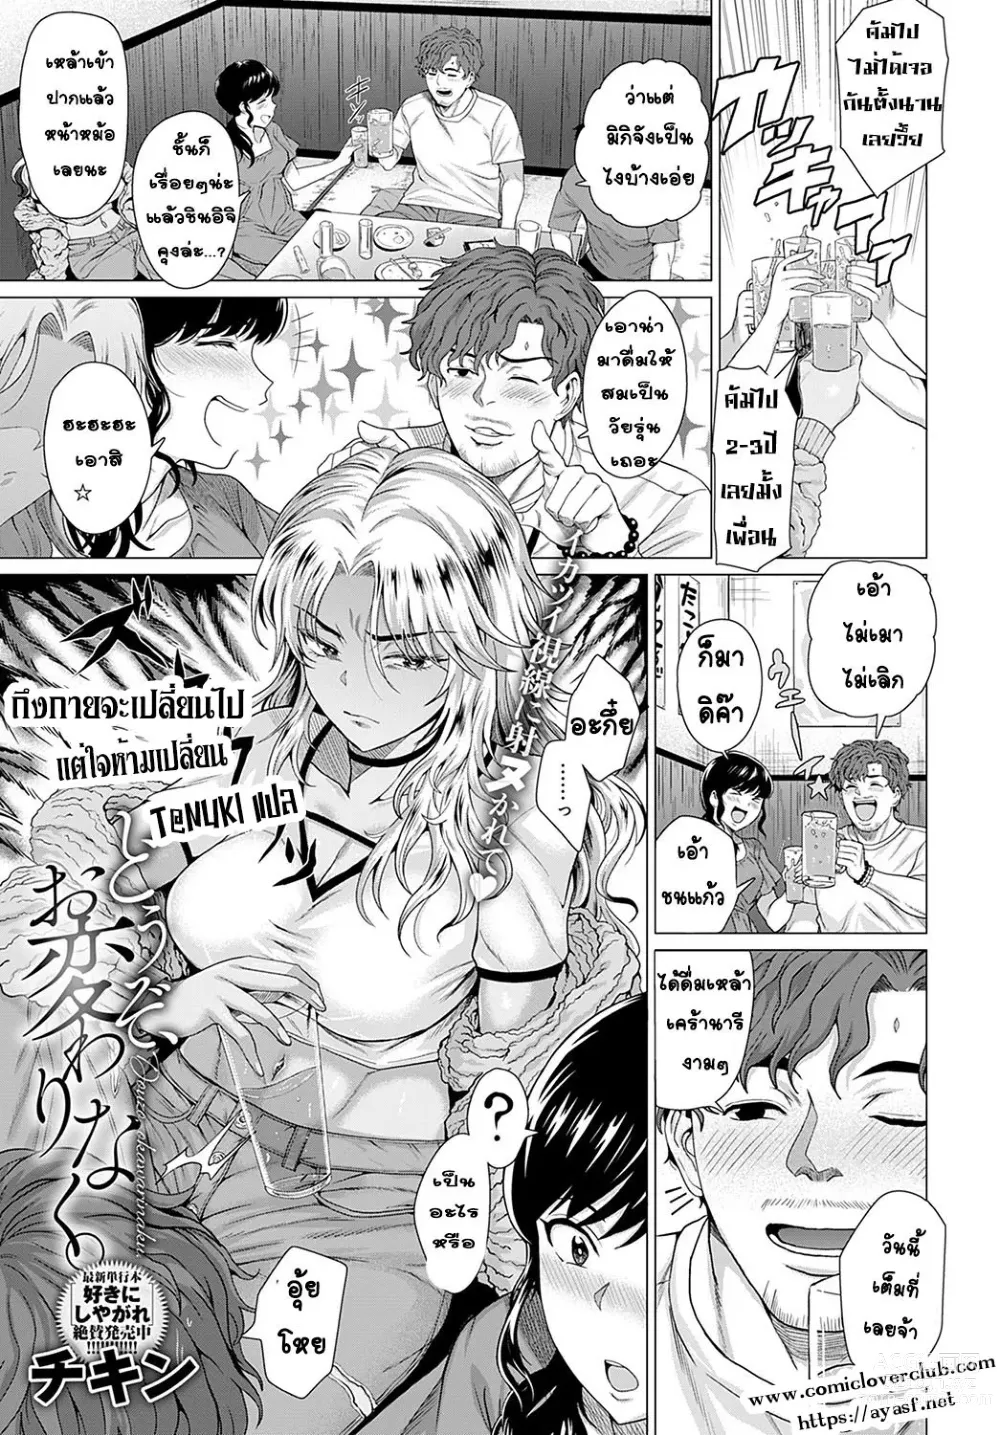 Page 1 of manga Douzo, Okawarinaku.